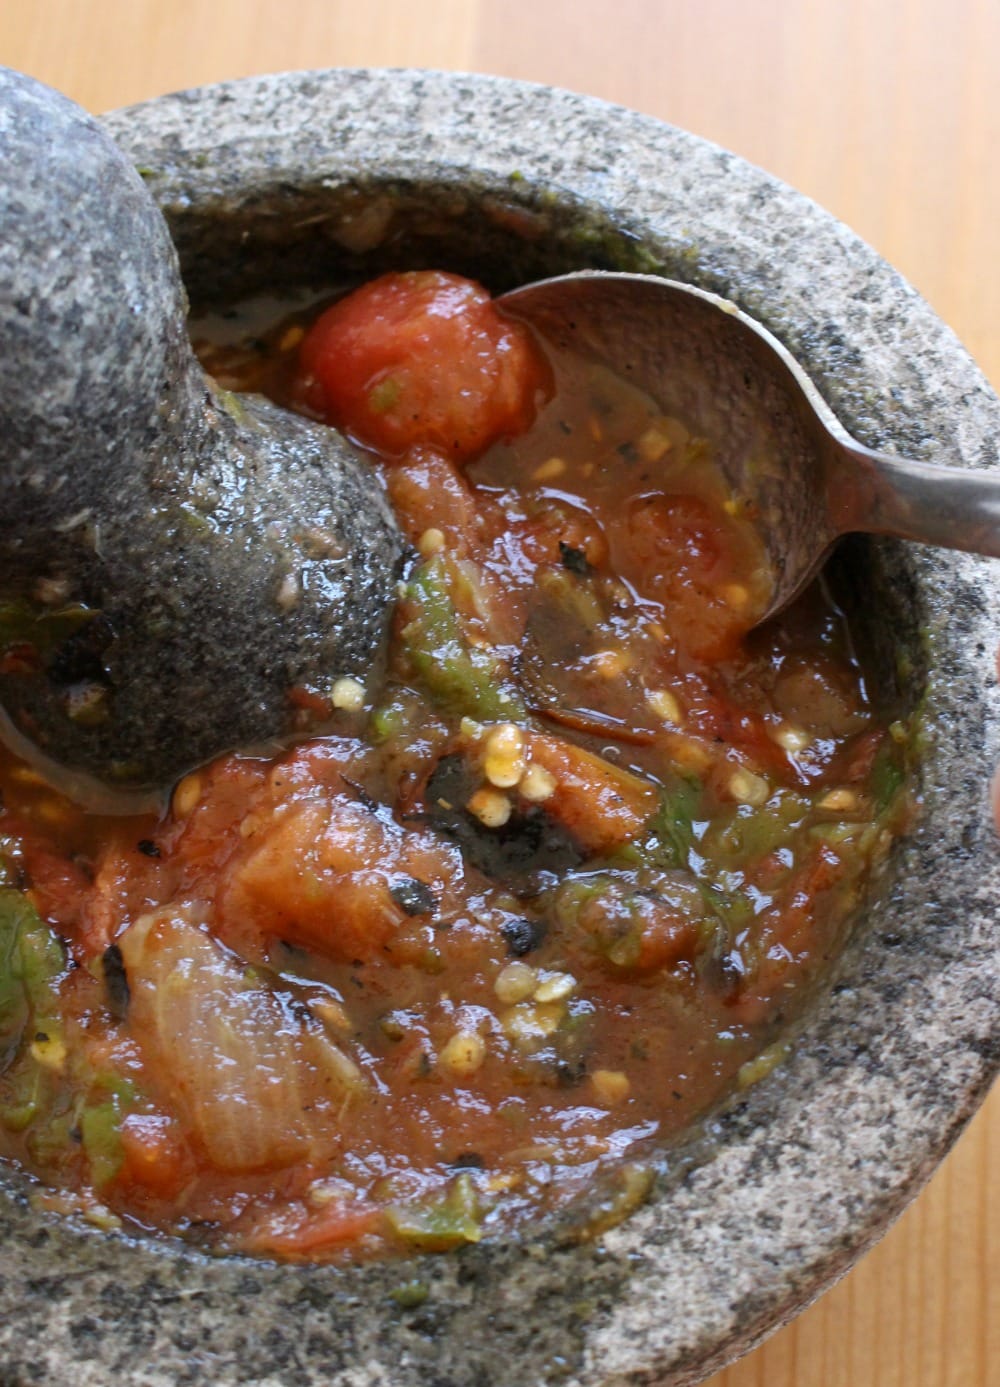 Spoon in molcajete mixing the salsa